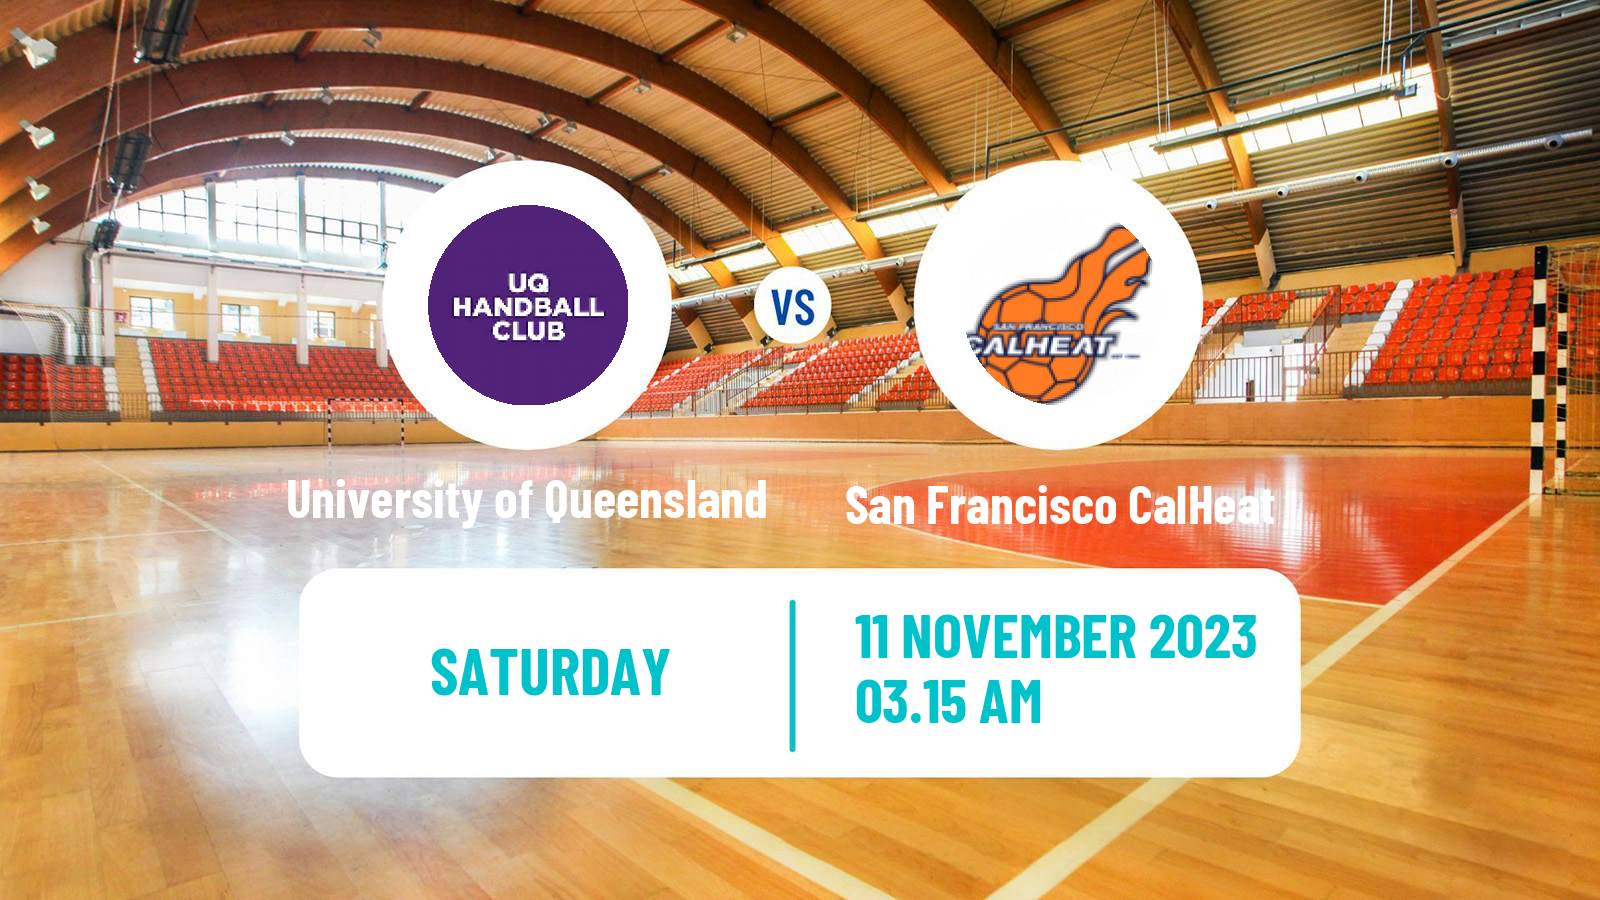 Handball Super Globe University of Queensland - San Francisco CalHeat